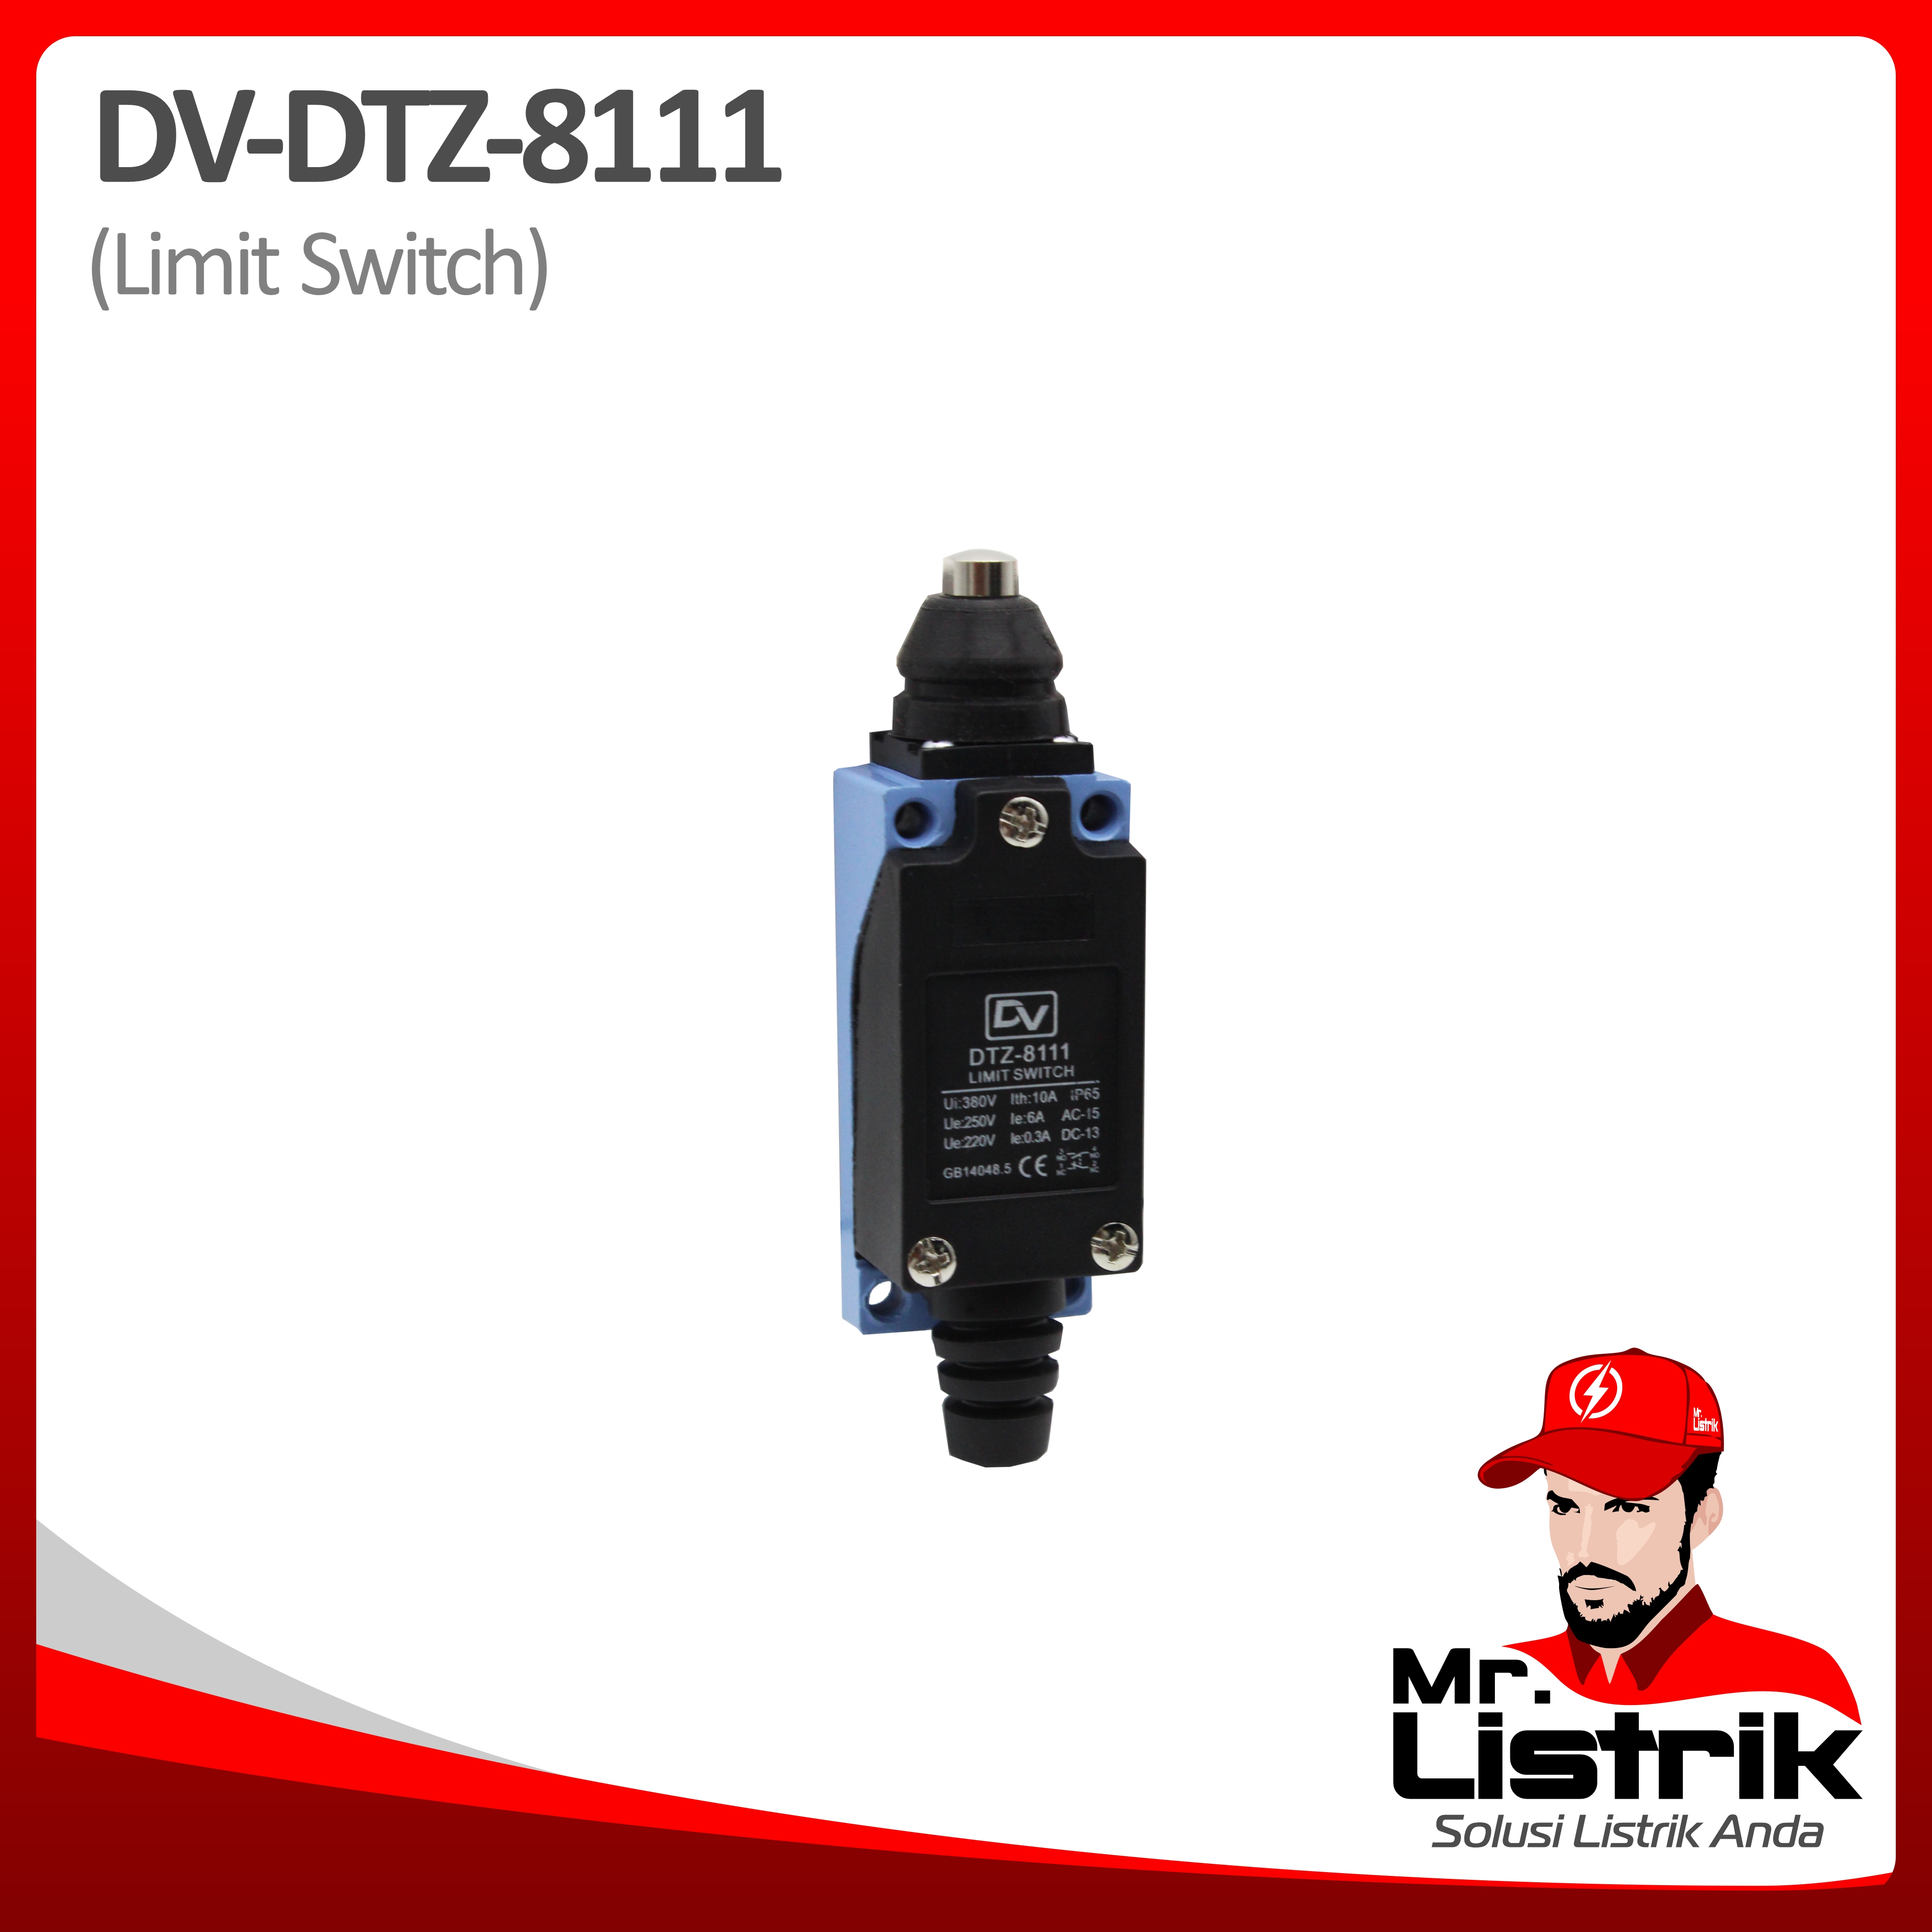 Limit Switch TZ Series DV DTZ-8111